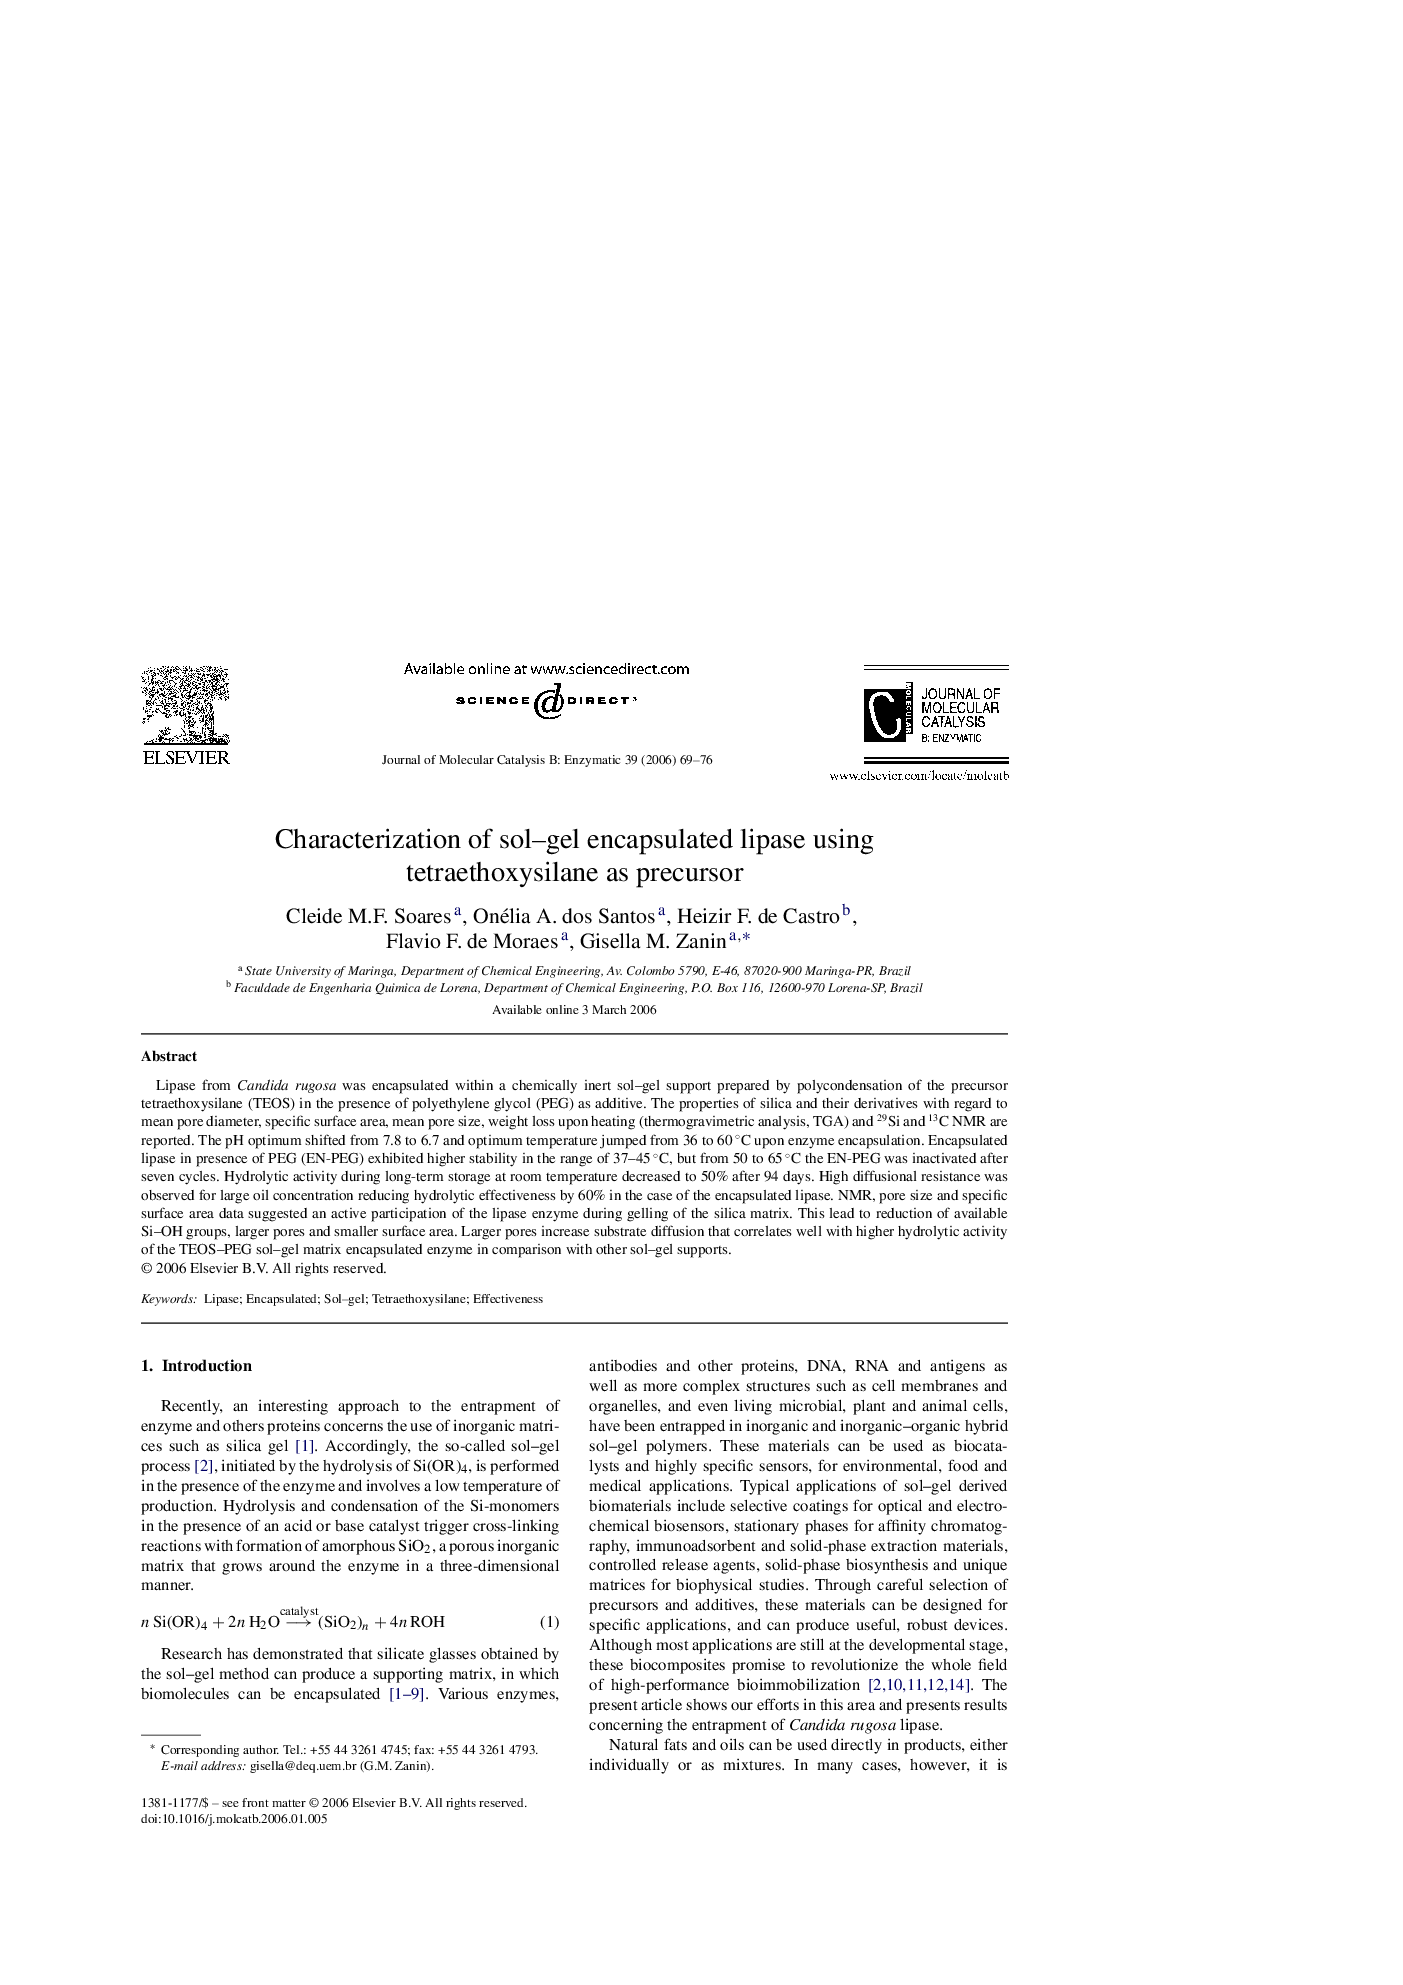 Characterization of sol–gel encapsulated lipase using tetraethoxysilane as precursor